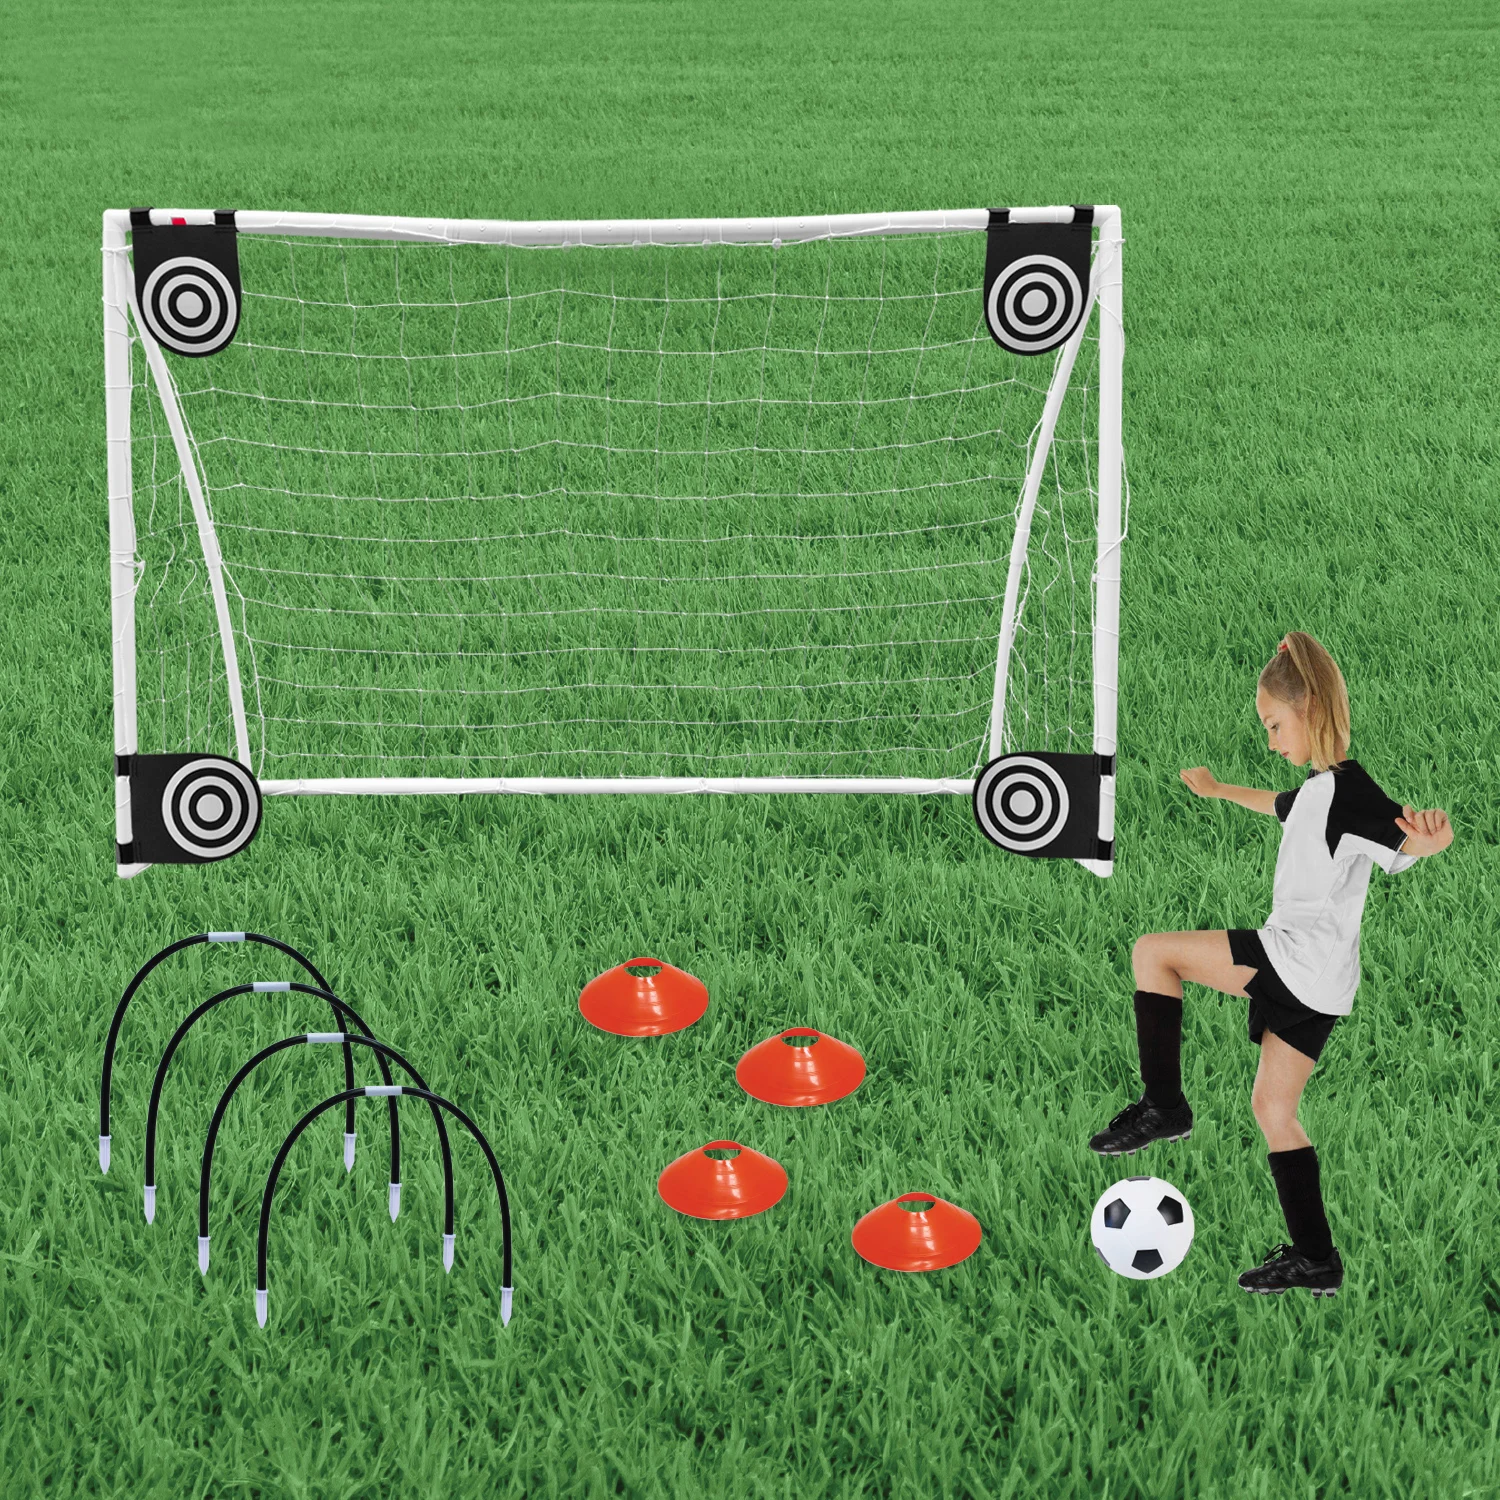 Soccer Goal Combo Set - 1 6ft Soccer Net, 1 Junior Soccer Ball, 4 Targets, 4 Cones, 4 Arches & Pump, Instant Soccer Game